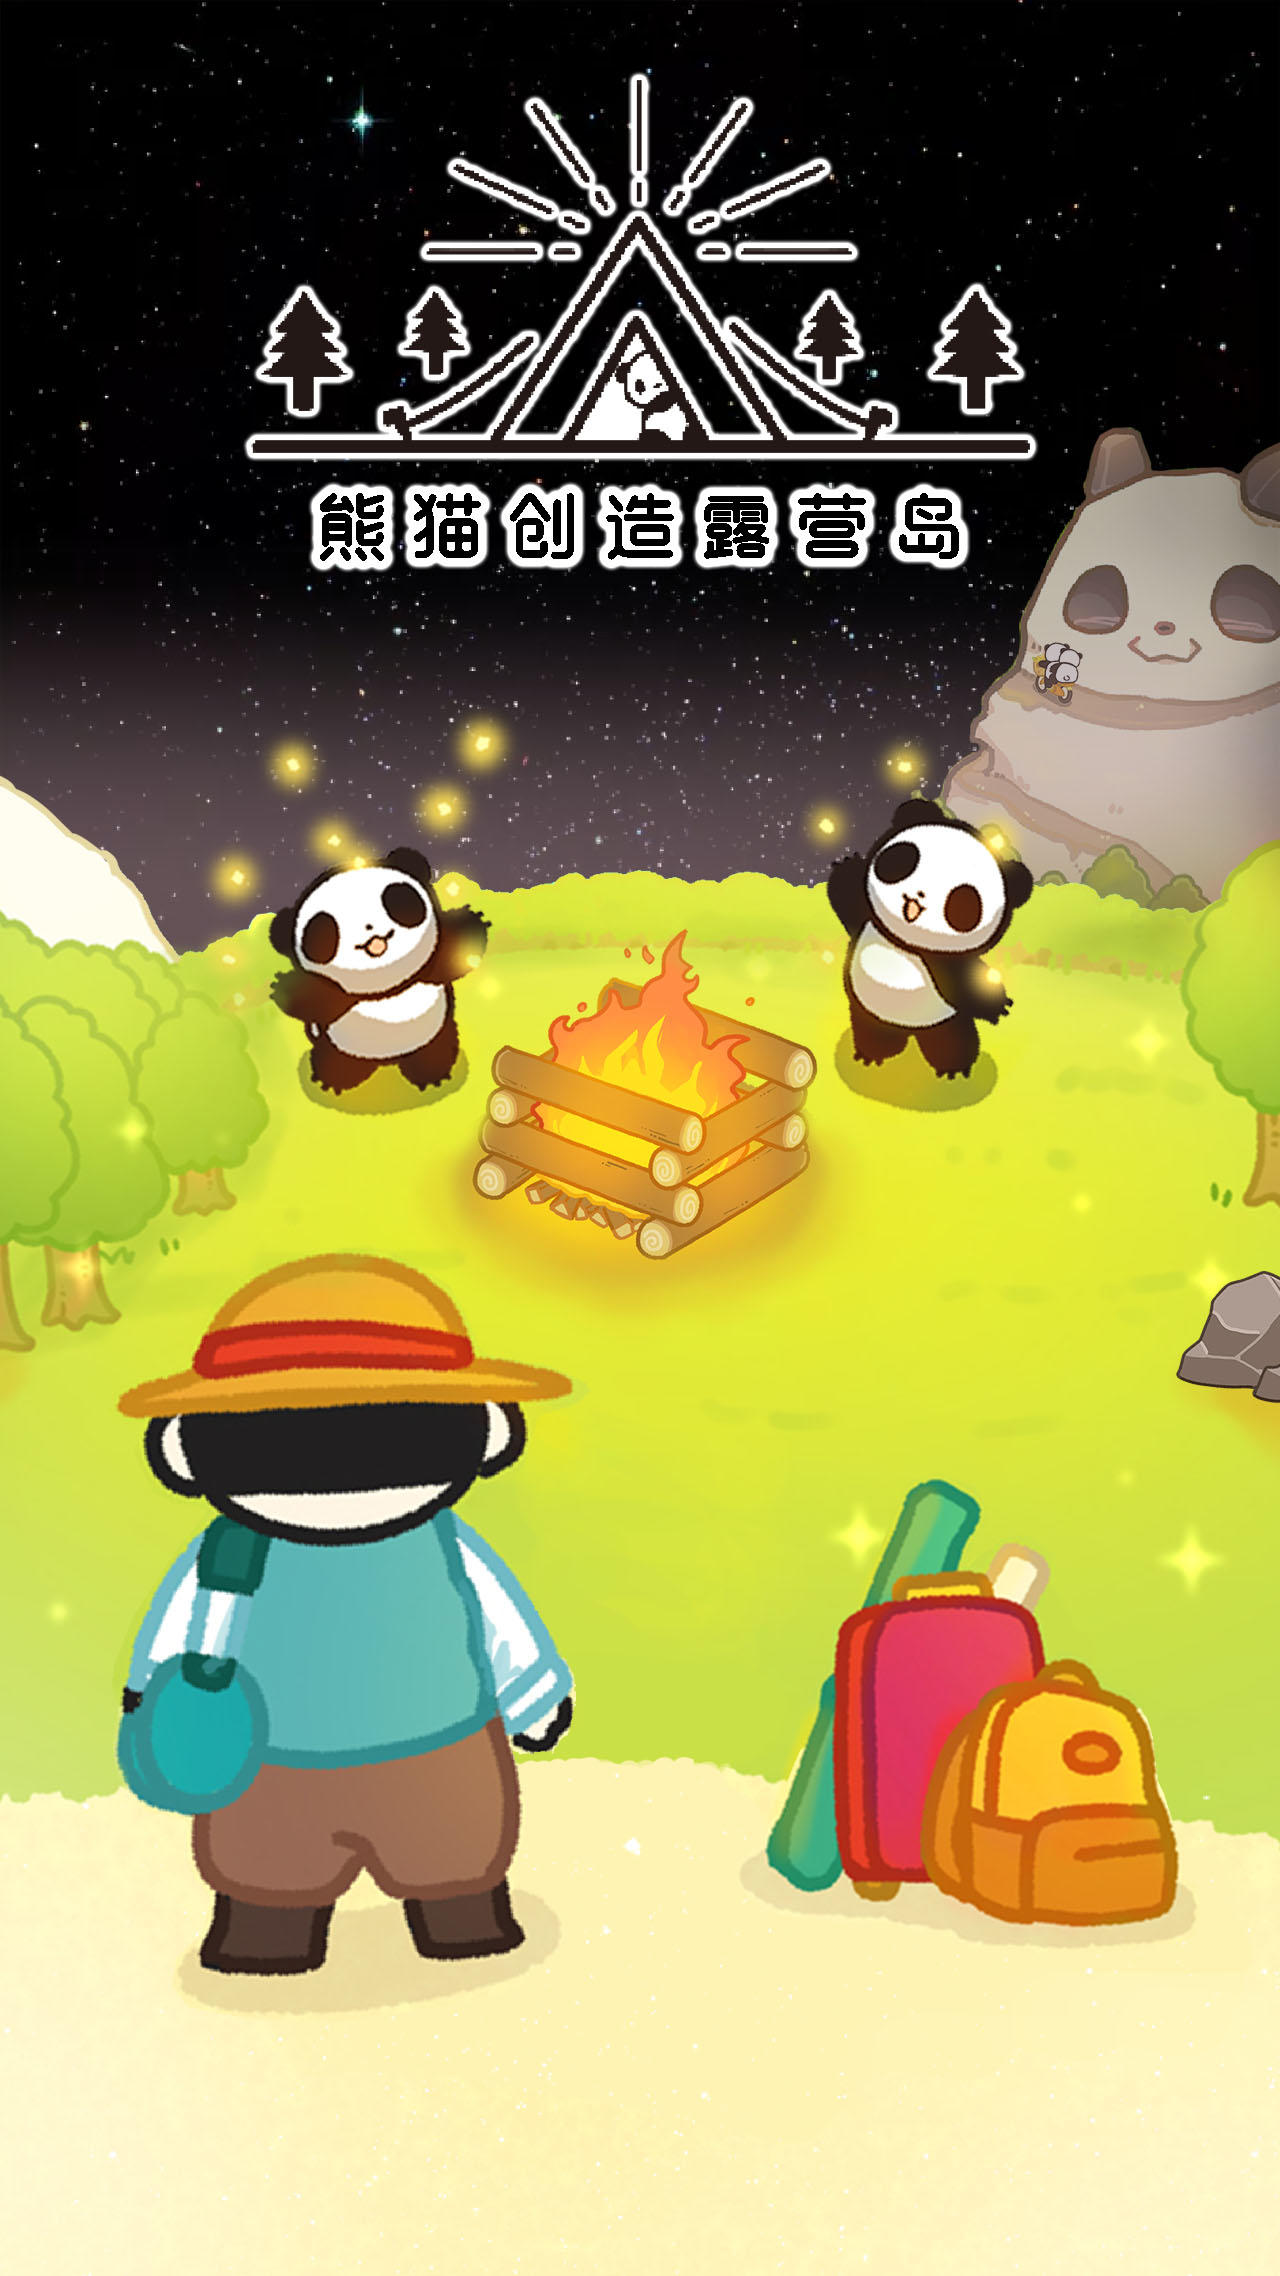 Screenshot 1 of Panda crée une île de camping 1.0.1